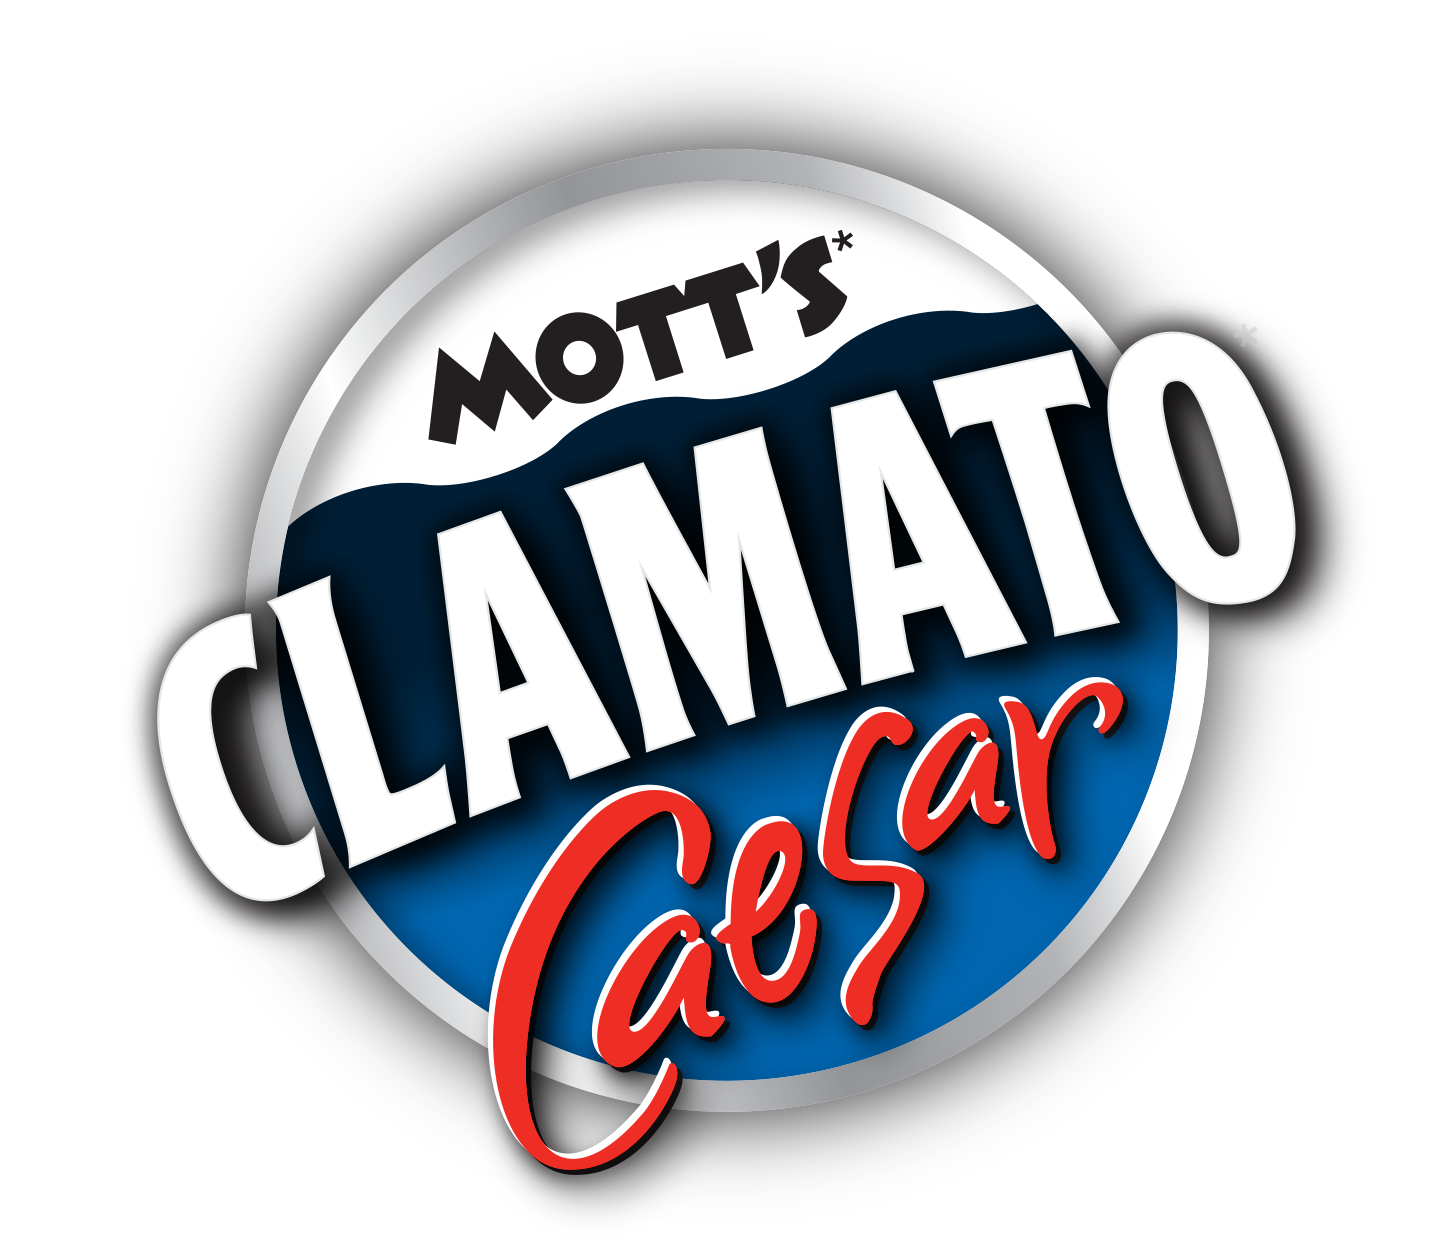 Motts Clamato Caesar Logo 2017_CMYK_BRMG.png